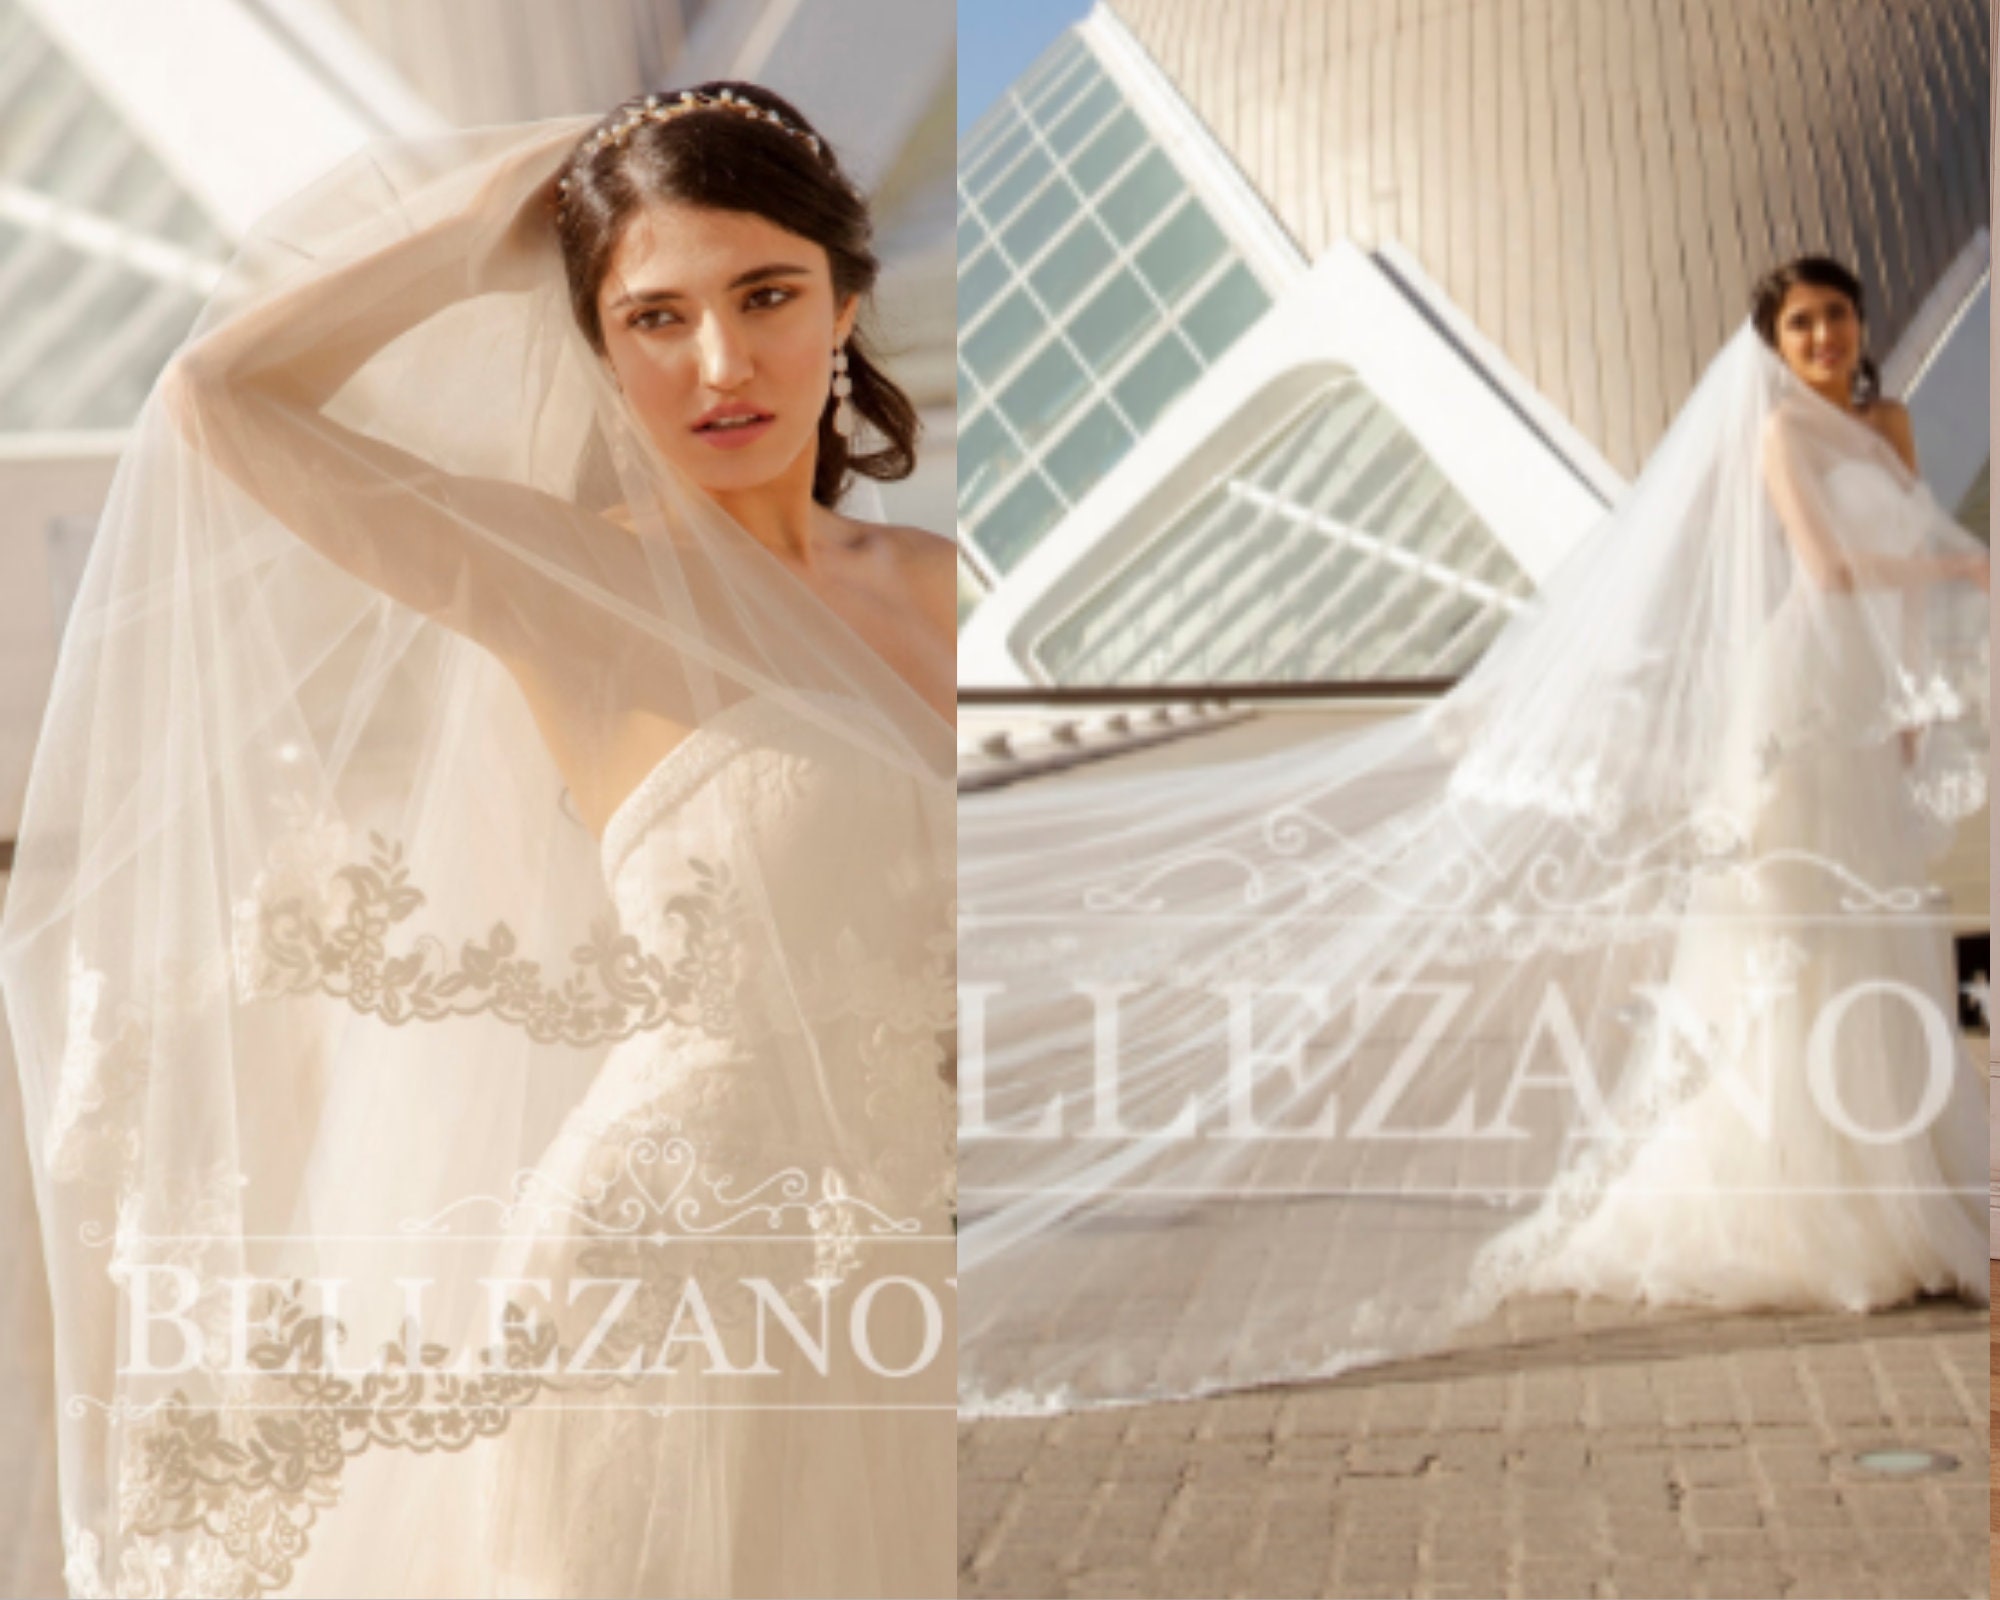 Brinote Sequins Lace Edge Wedding Veils for Brides 2-Tier Short